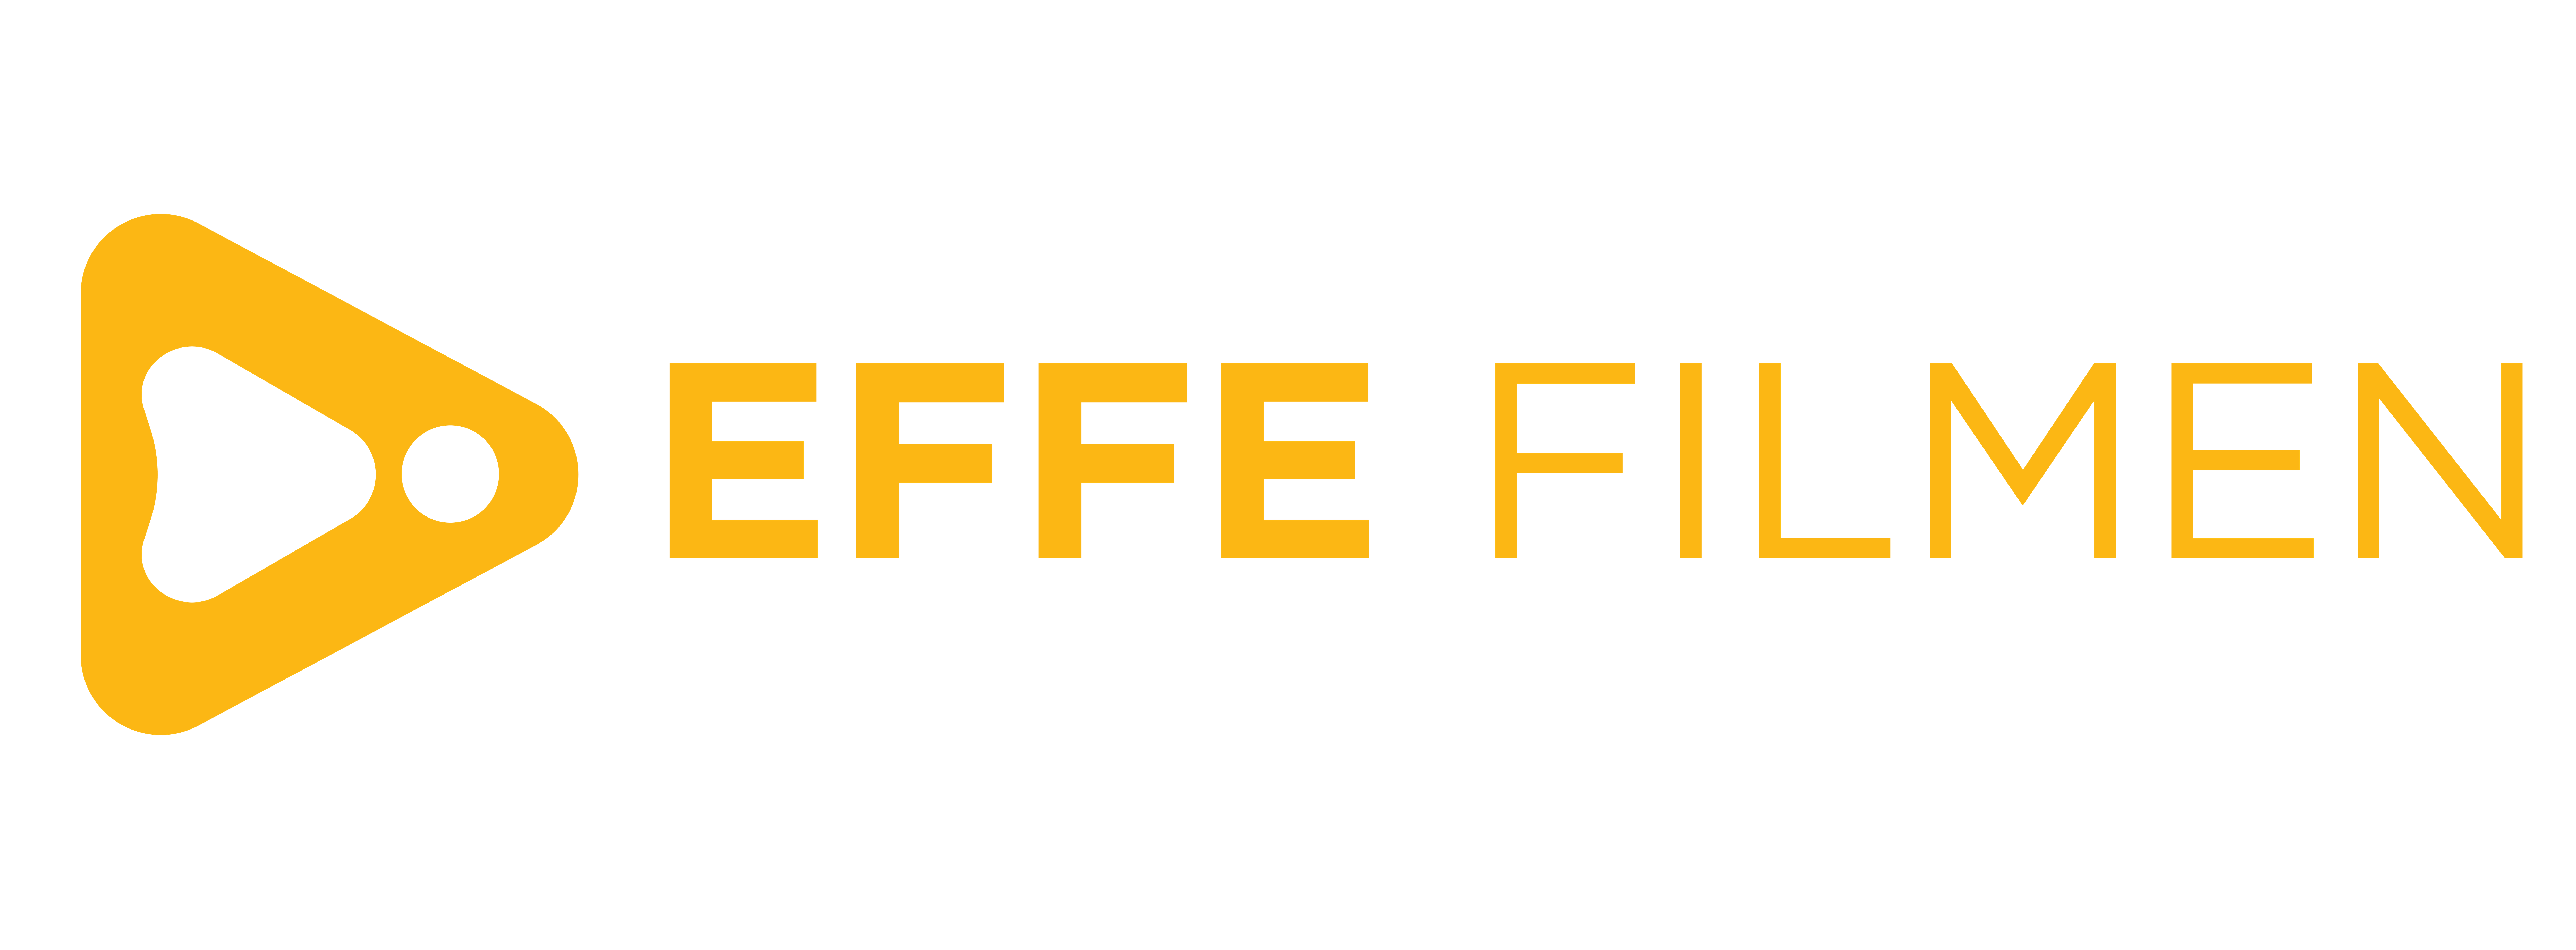 Effe filmen logo lang